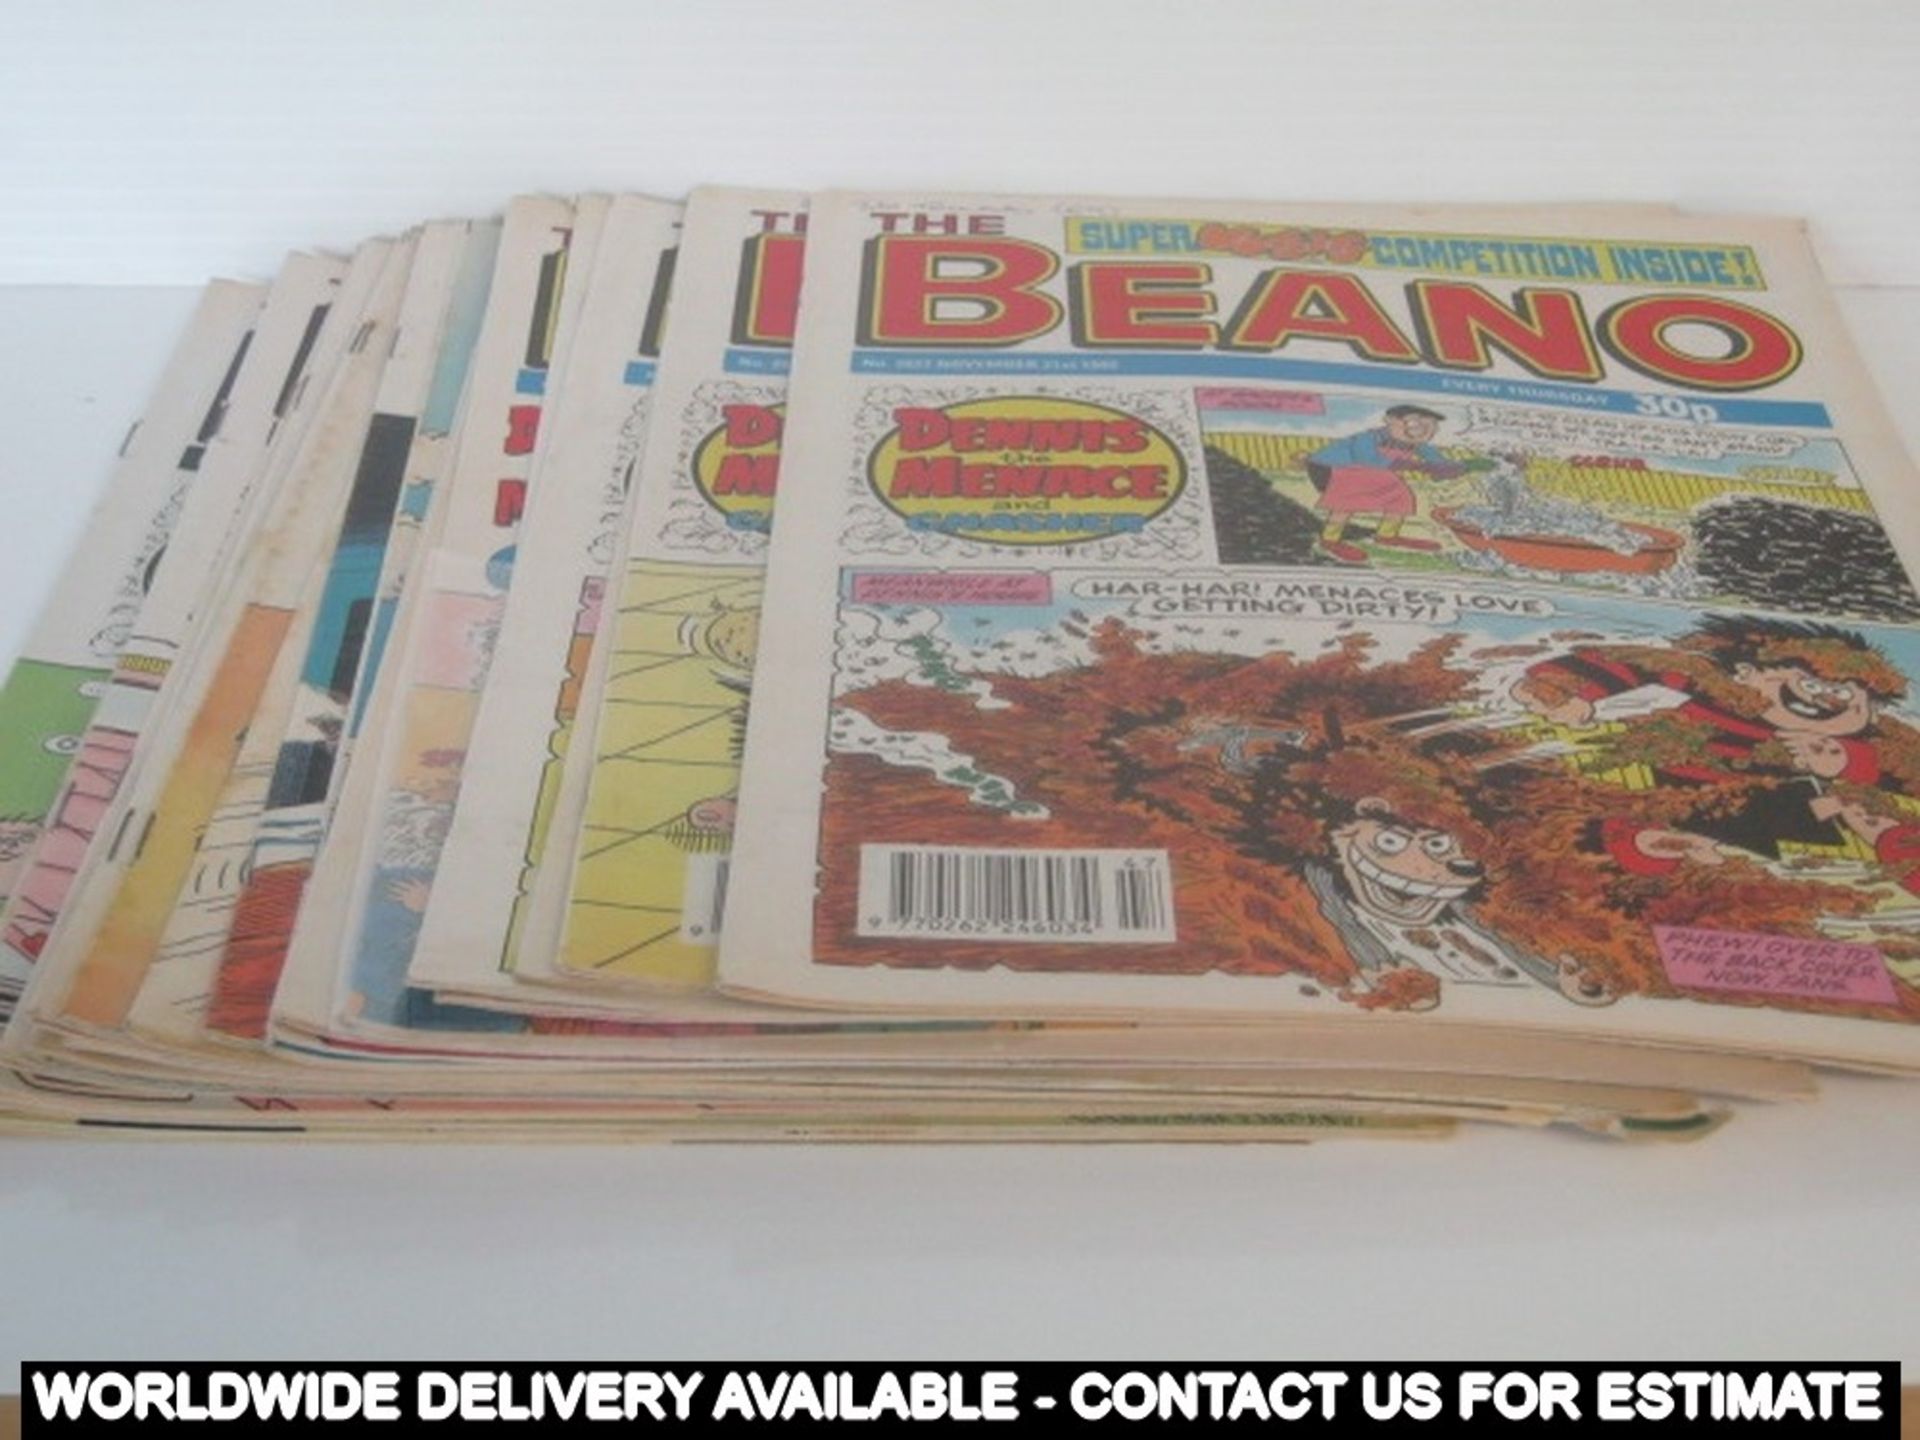 20 x Beano comics (approximately) - ranging from May 1992 to November 1992